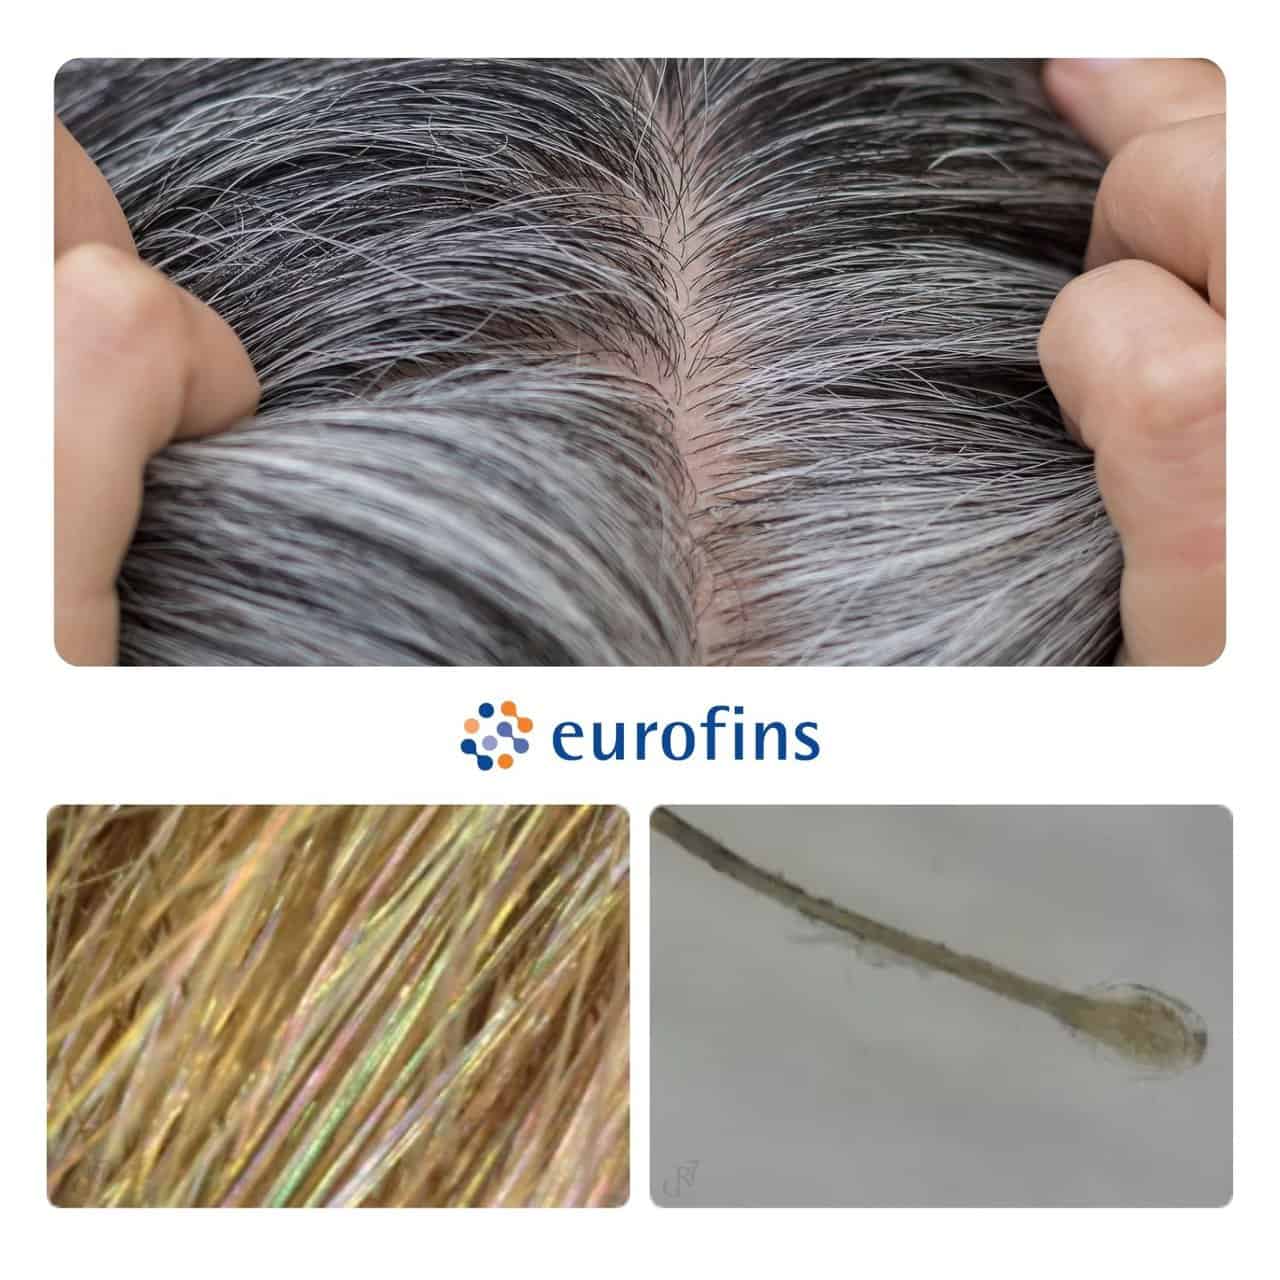 anti grey hair treatment effects of gr-7